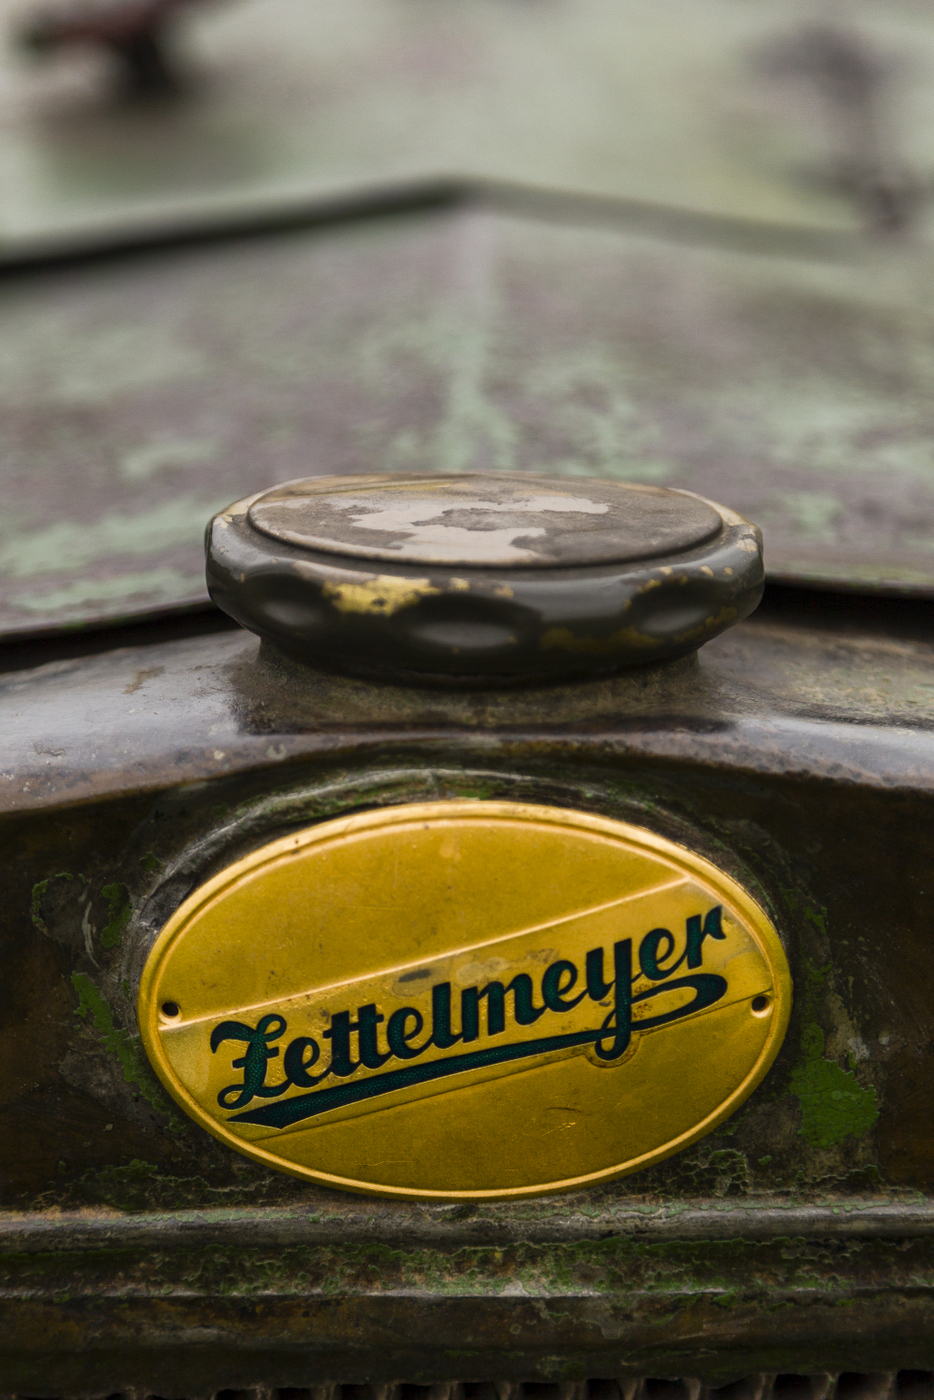 Oldtimer tractoren | Aubel (B) 2013